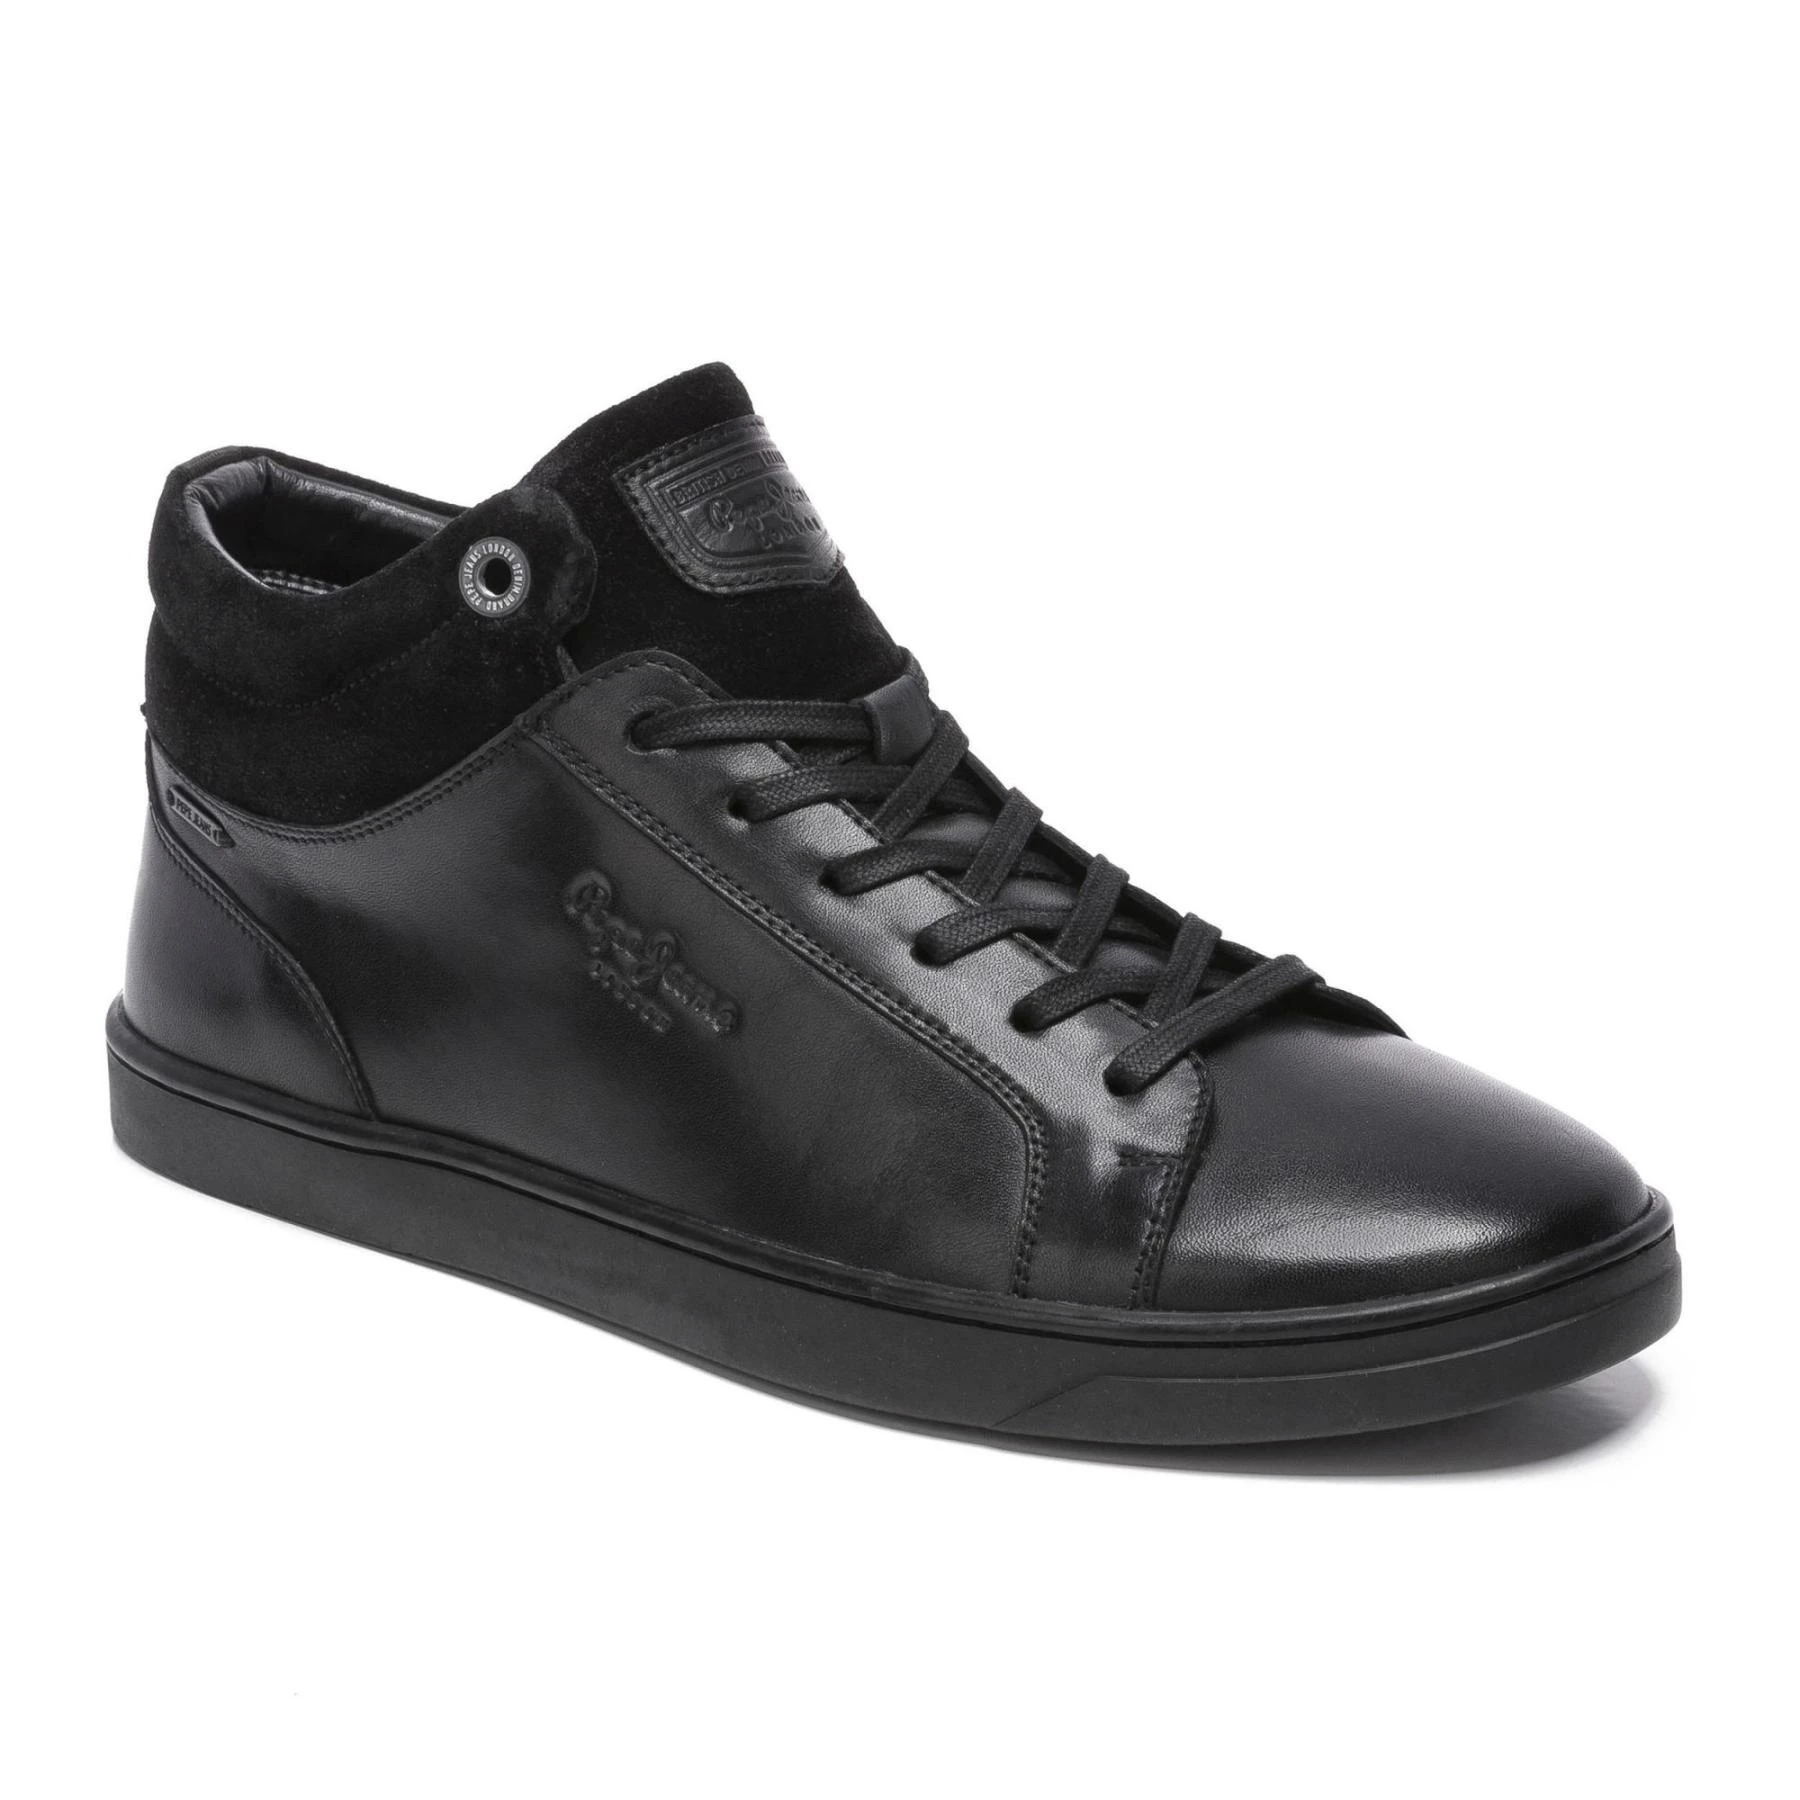 Zapatillas de altas para hombre, color negro, Londres (Doc LTH pms30693)| - AliExpress